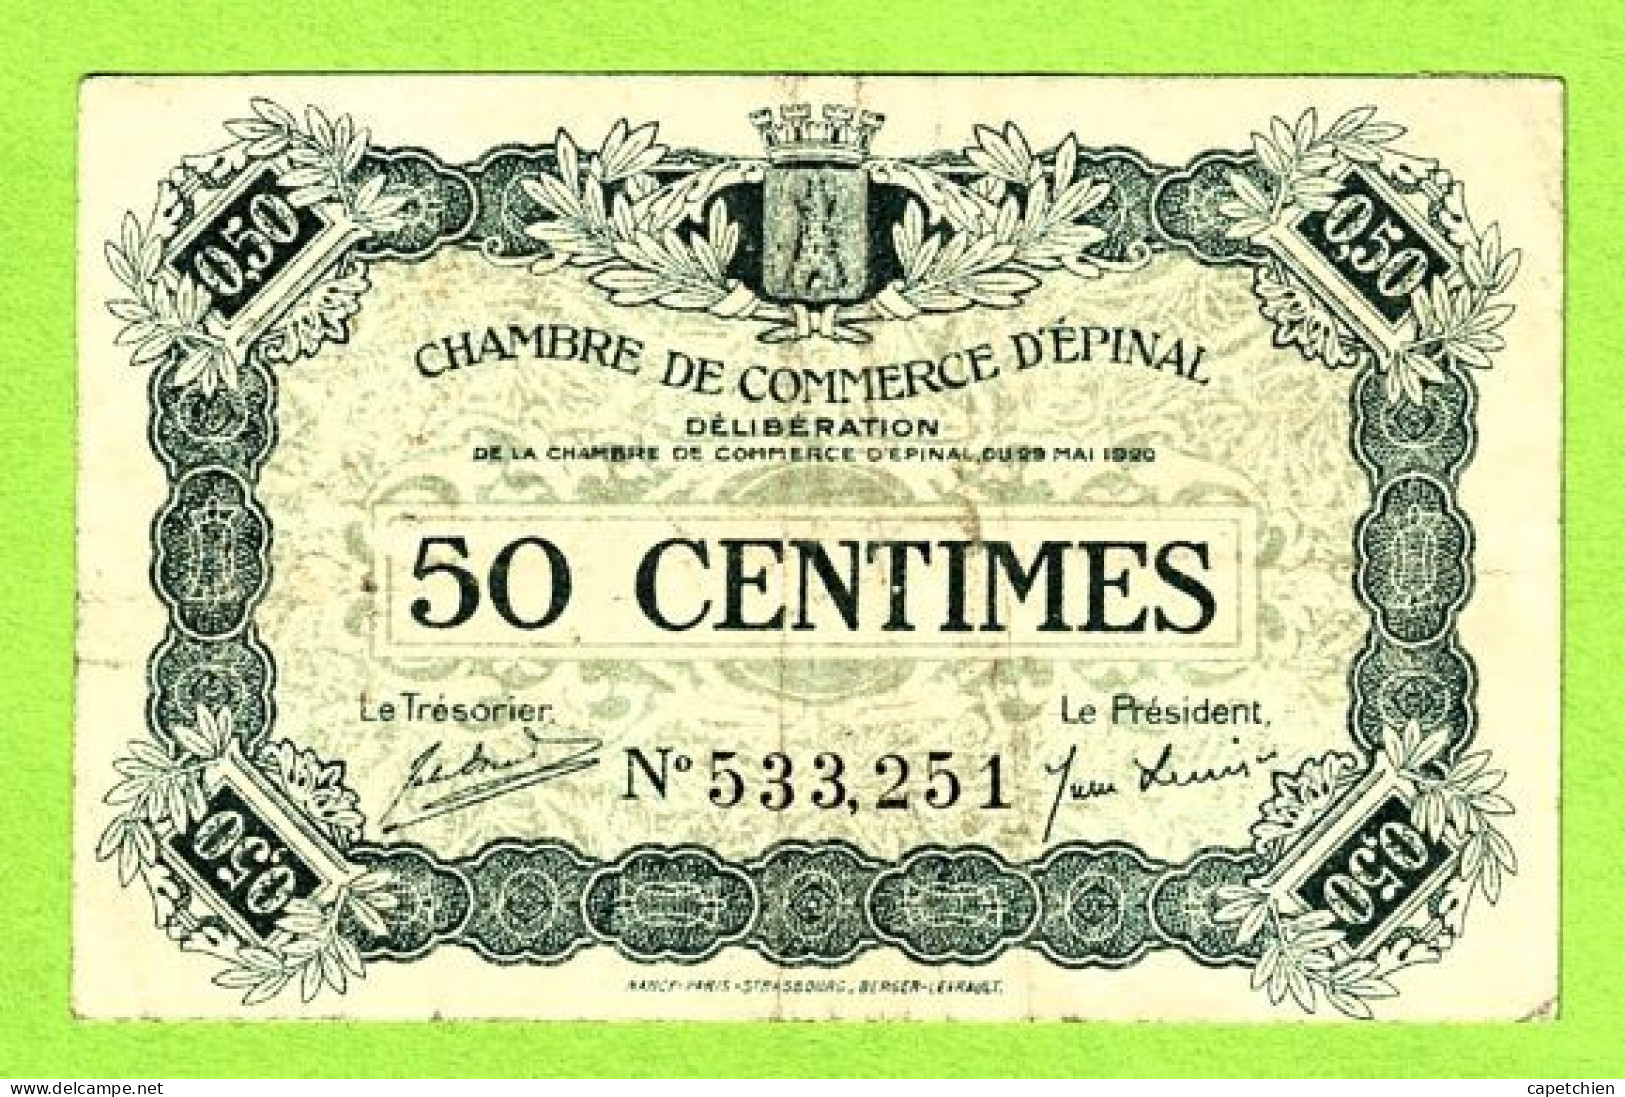 FRANCE / CHAMBRE De COMMERCE D'EPINAL / 50 CENTIMES / 29 MAI 1920  / N° 533251 - Cámara De Comercio